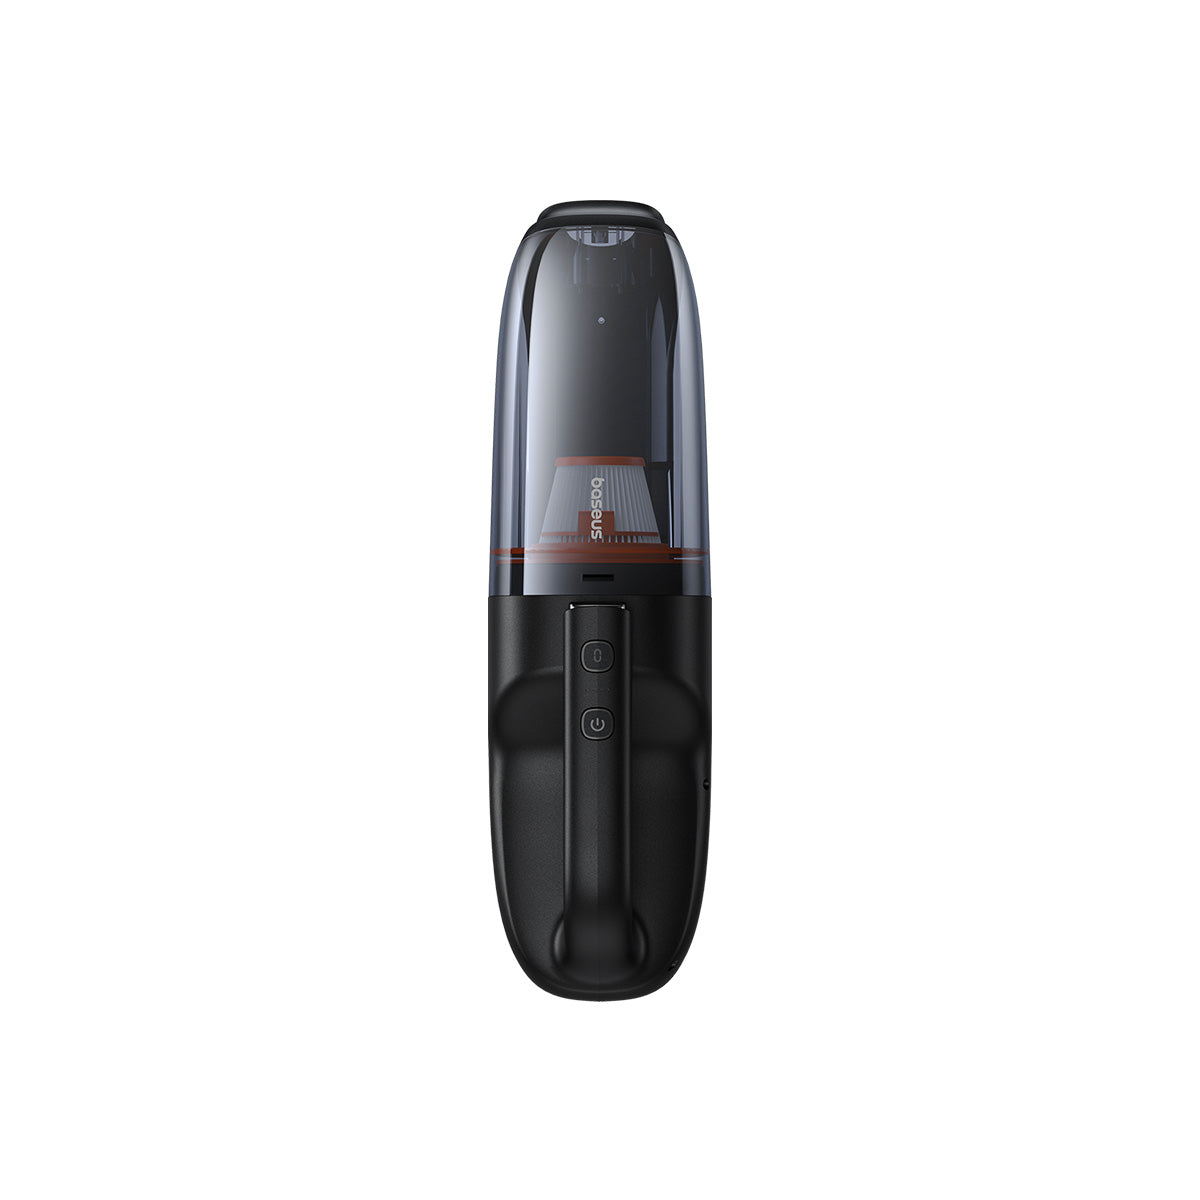 Baseus AP02 Handheld Vacuum Cleaner